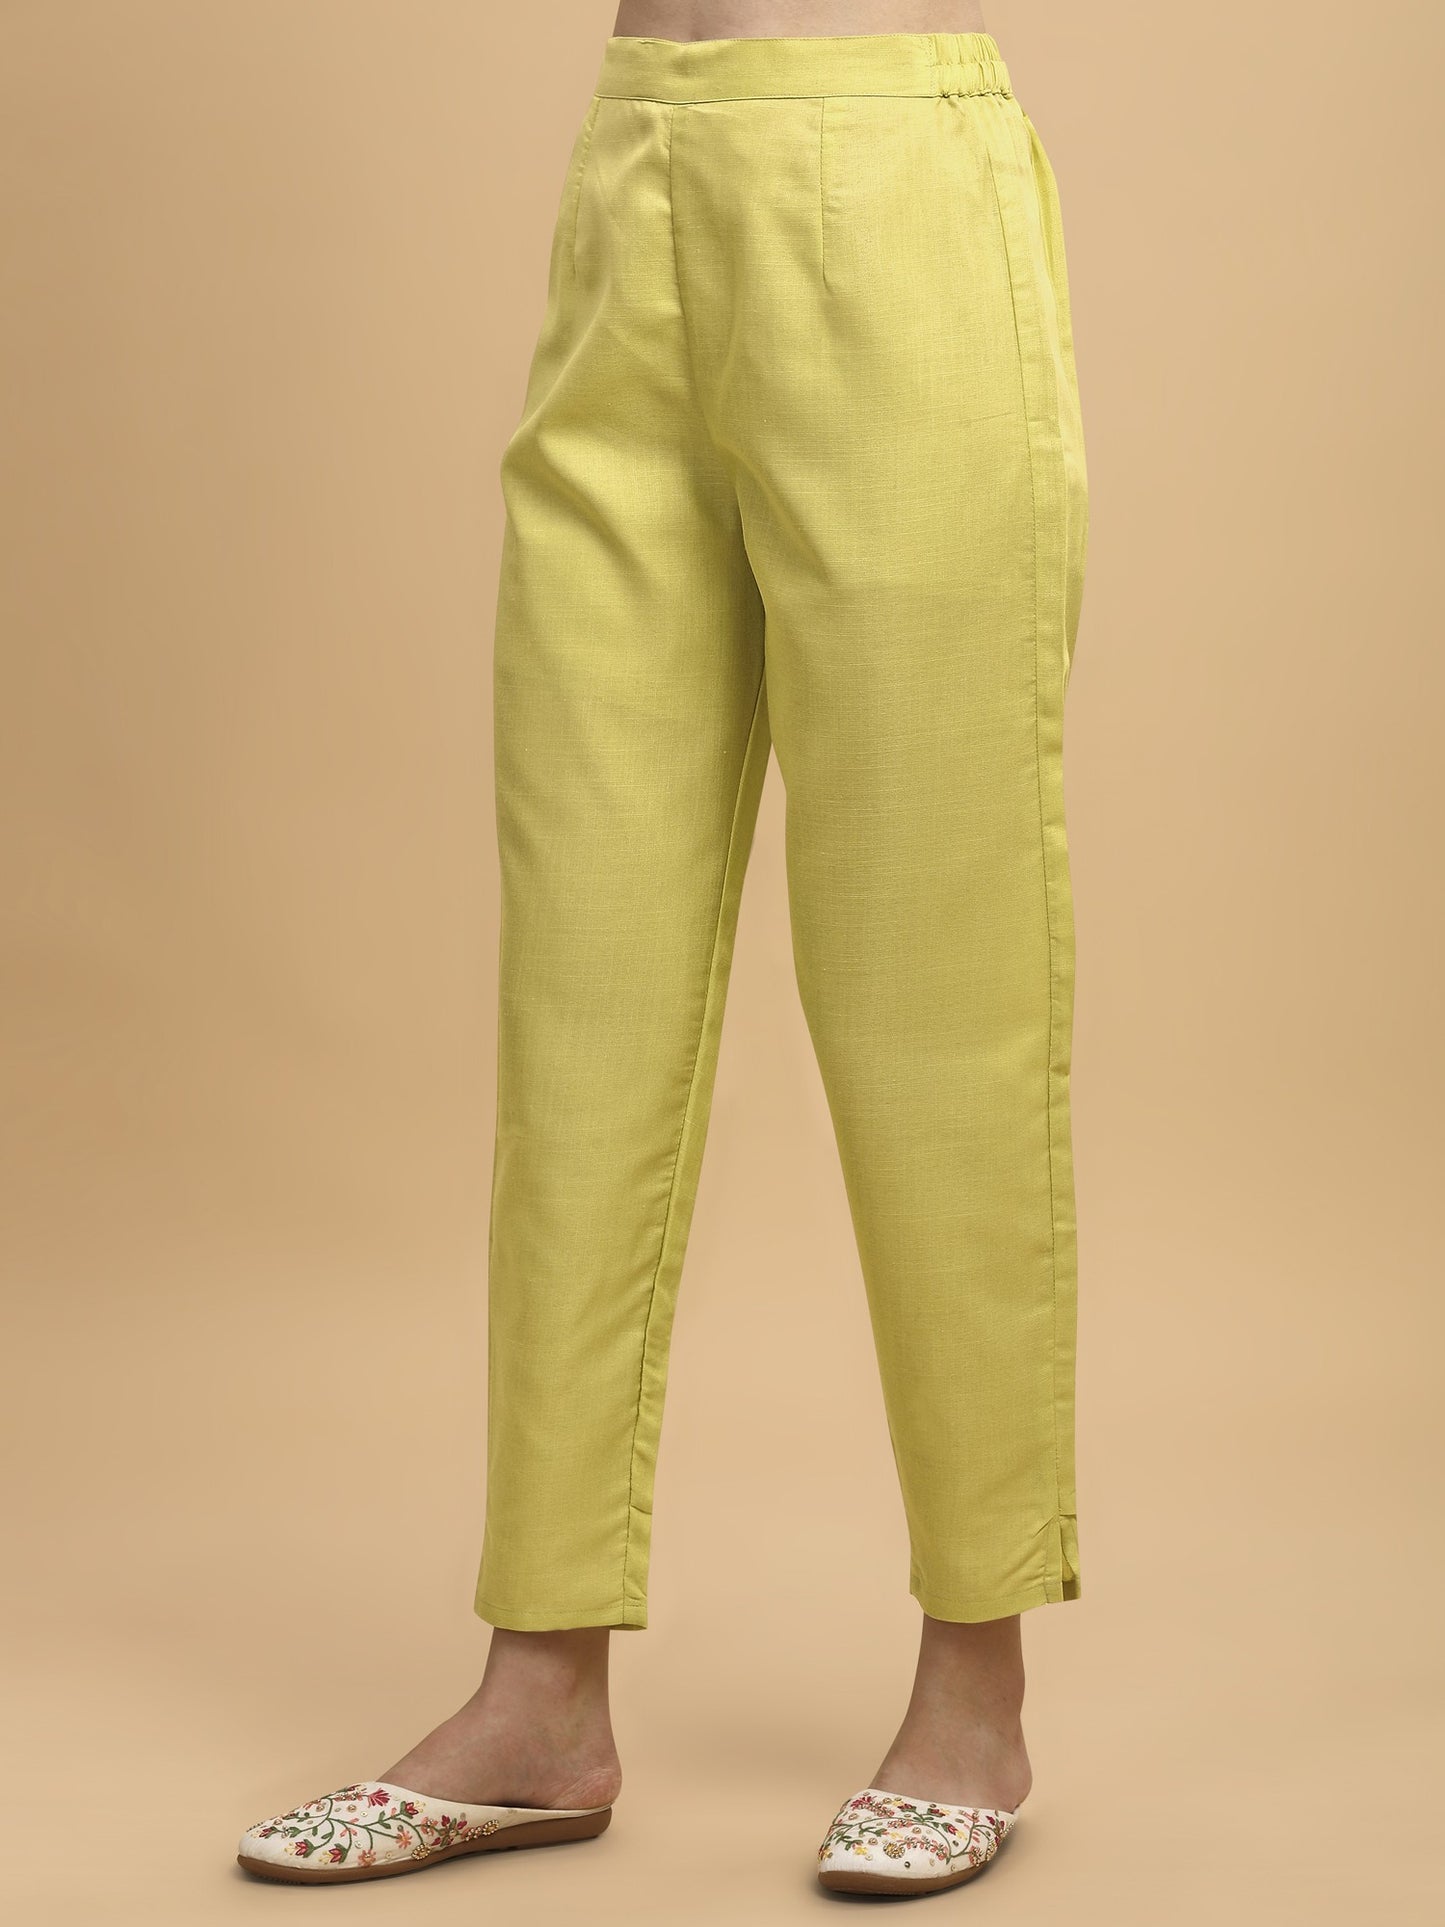 Green Colour Slub Cotton Embroidery Casual Wear Kurta Pant Dupatta Set For Women's